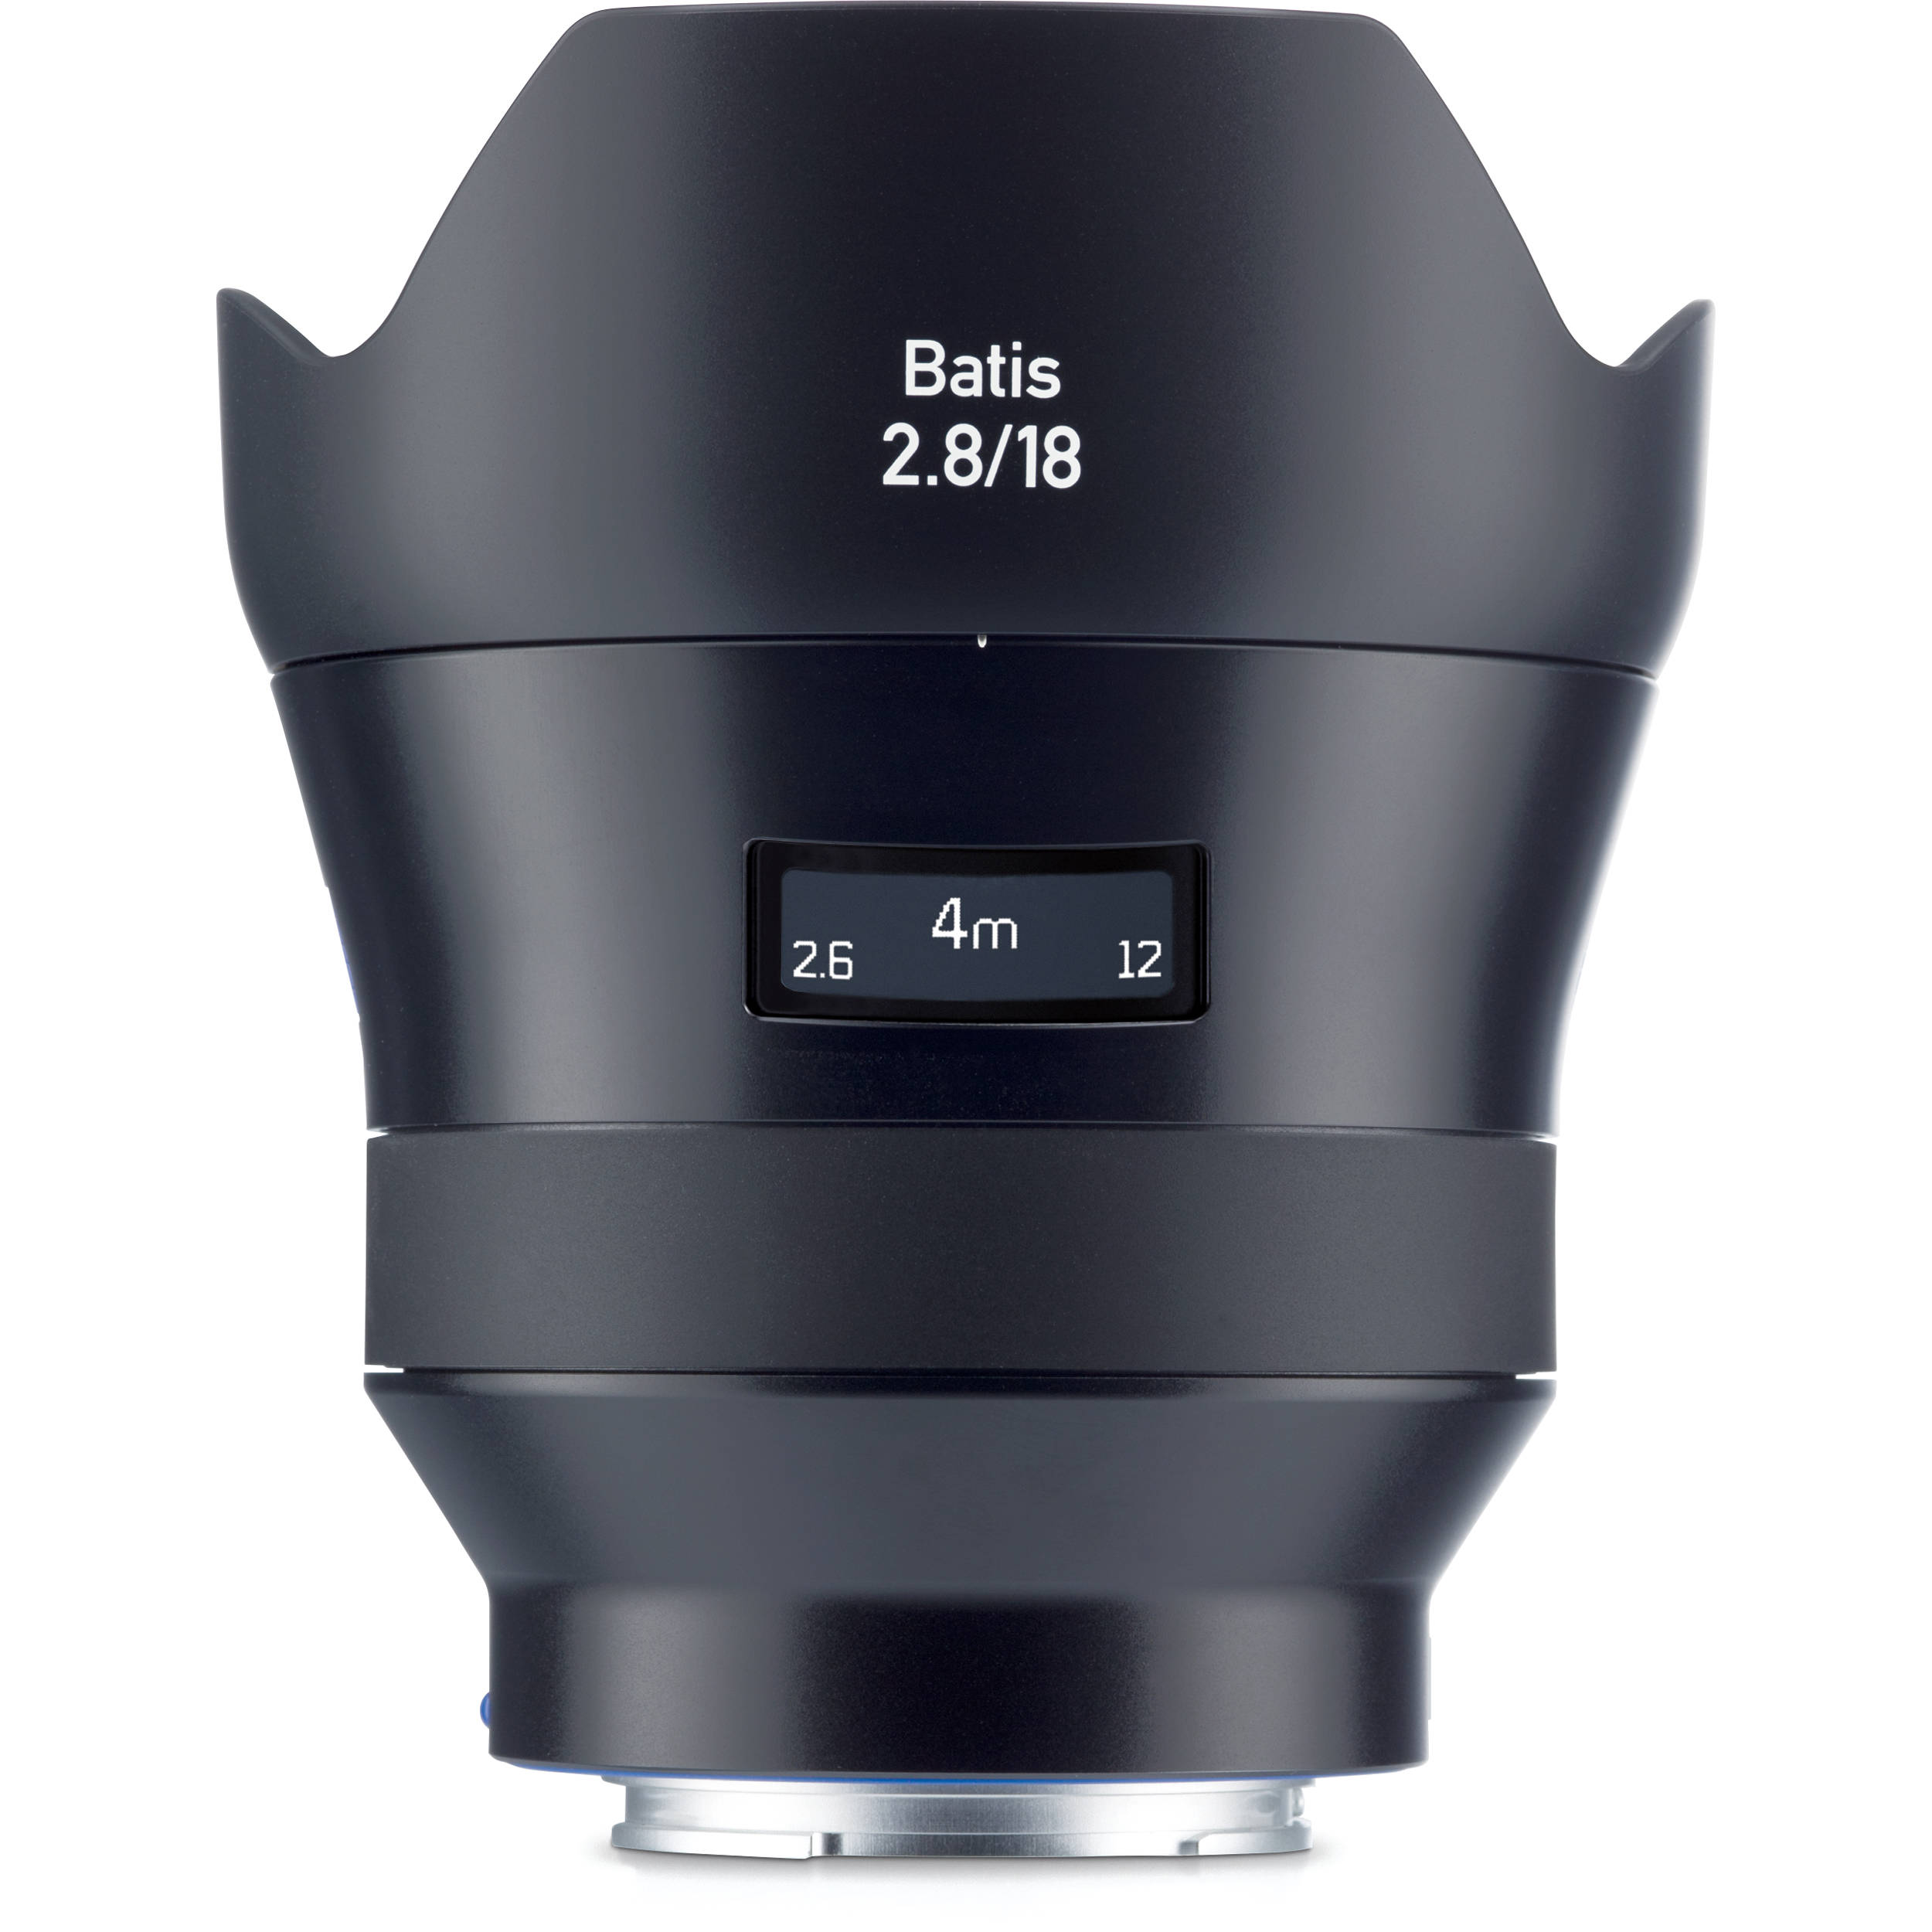 Zeiss Batis 18mm F 2 8 Lens For Sony E 2136 691 B H Photo Video